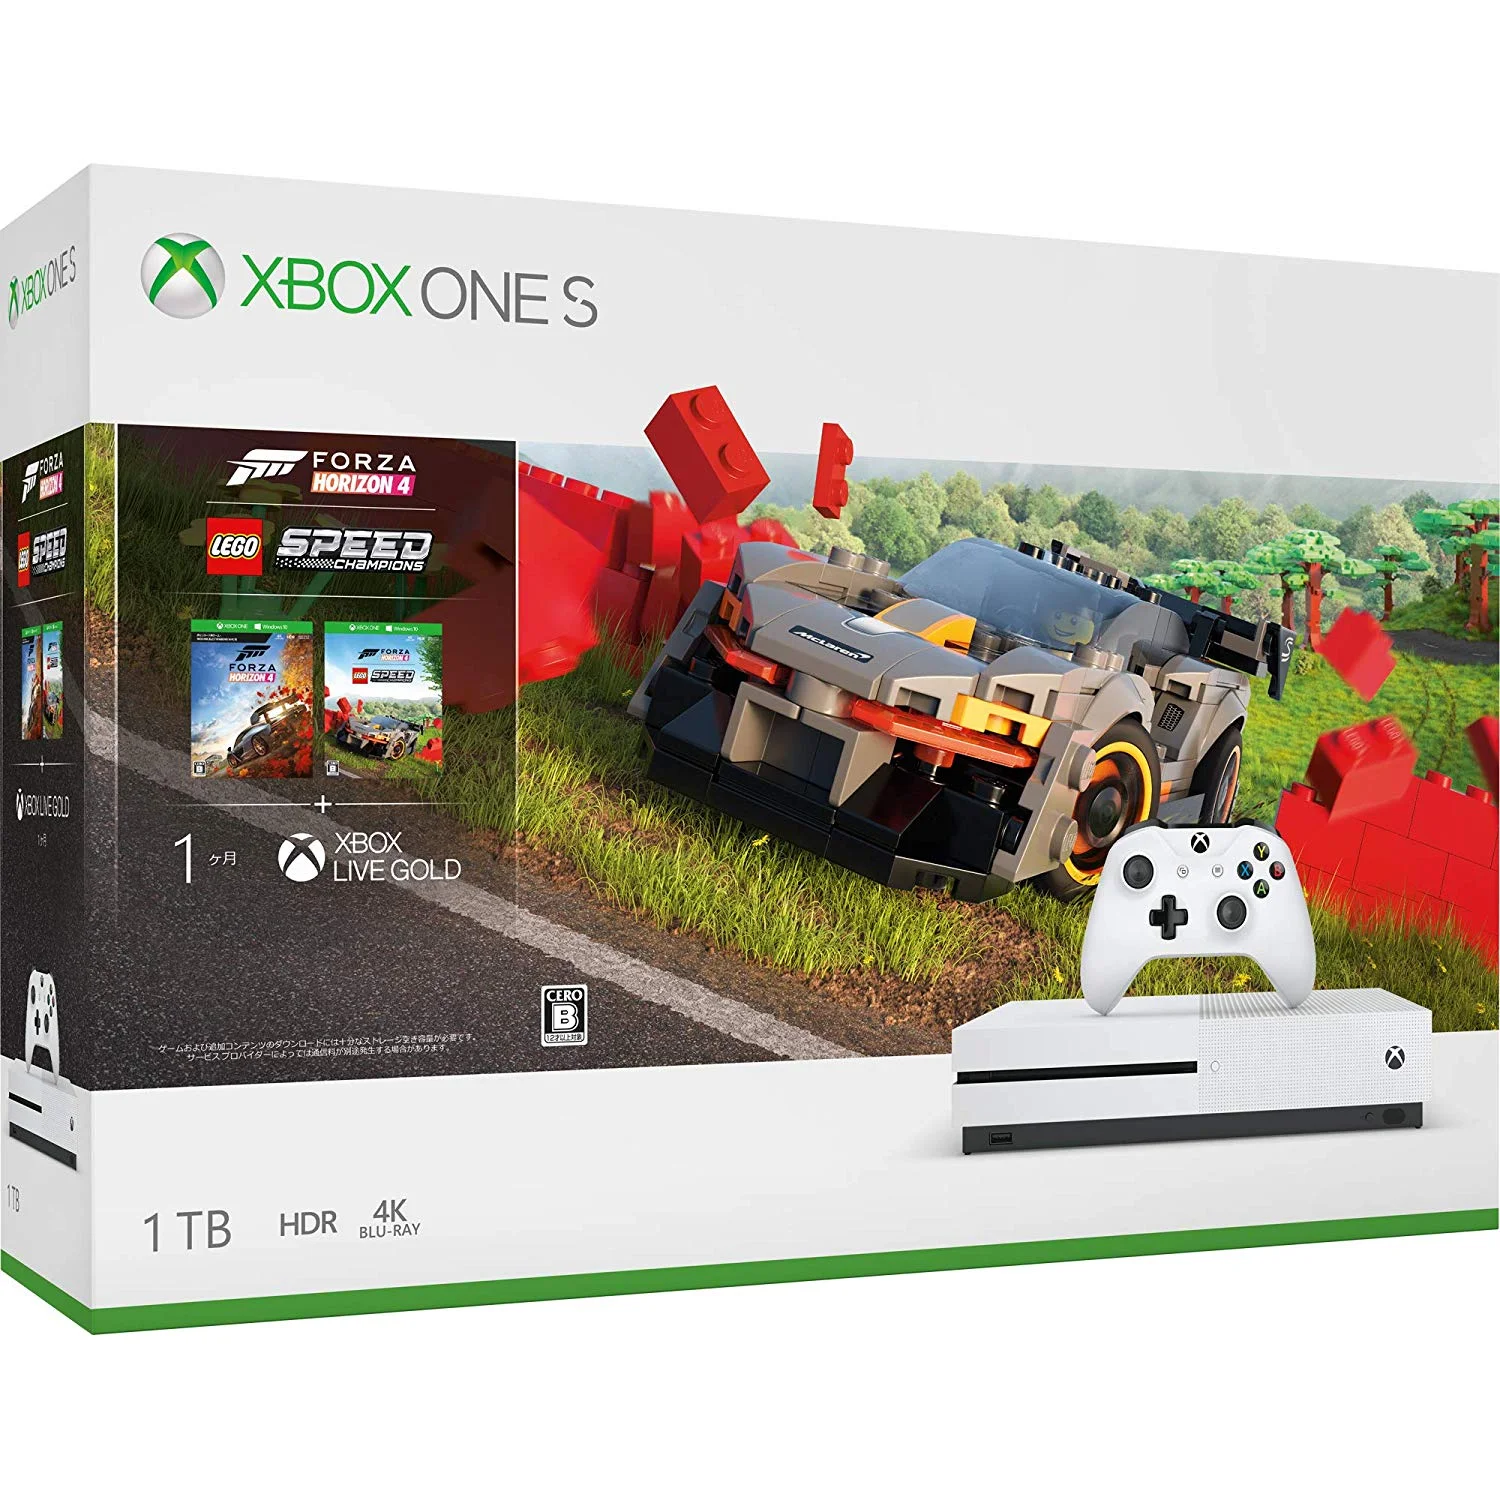  Microsoft Xbox One S Forza Horizon 4 + Lego Speed Champions Bundle